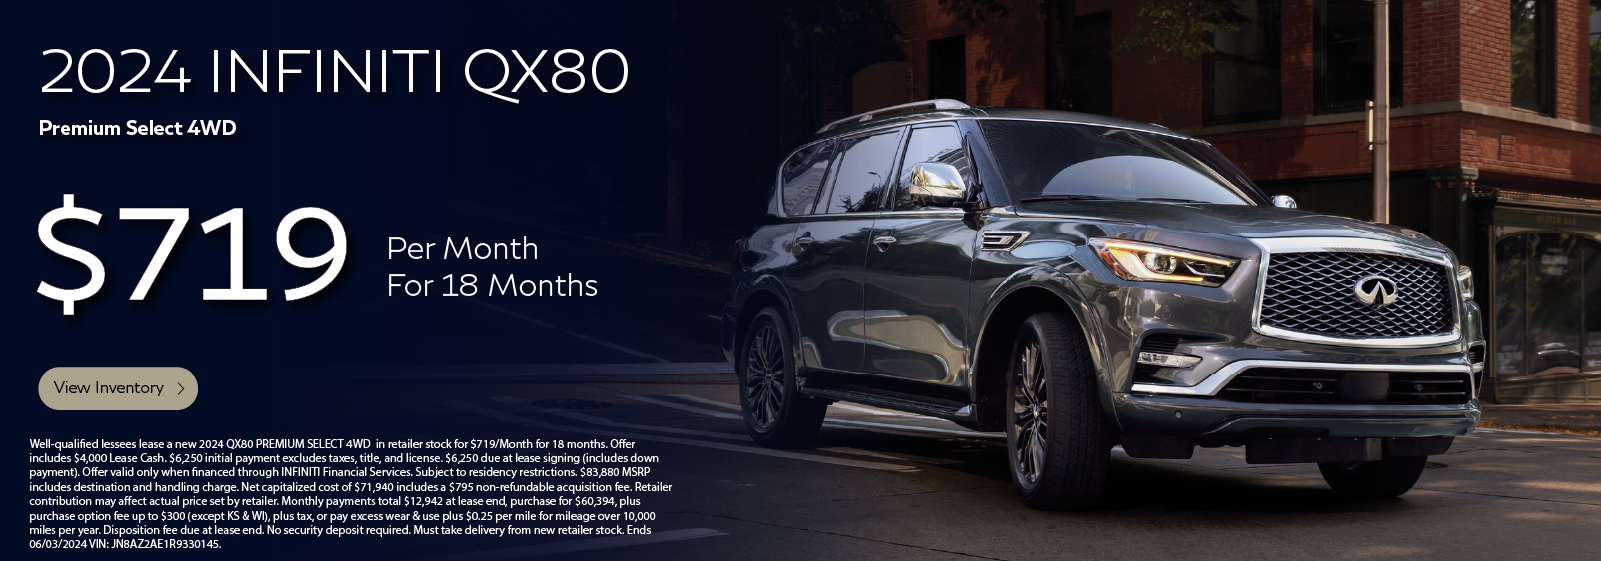 2024 INFINITI QX80 Premium Select AWD May 